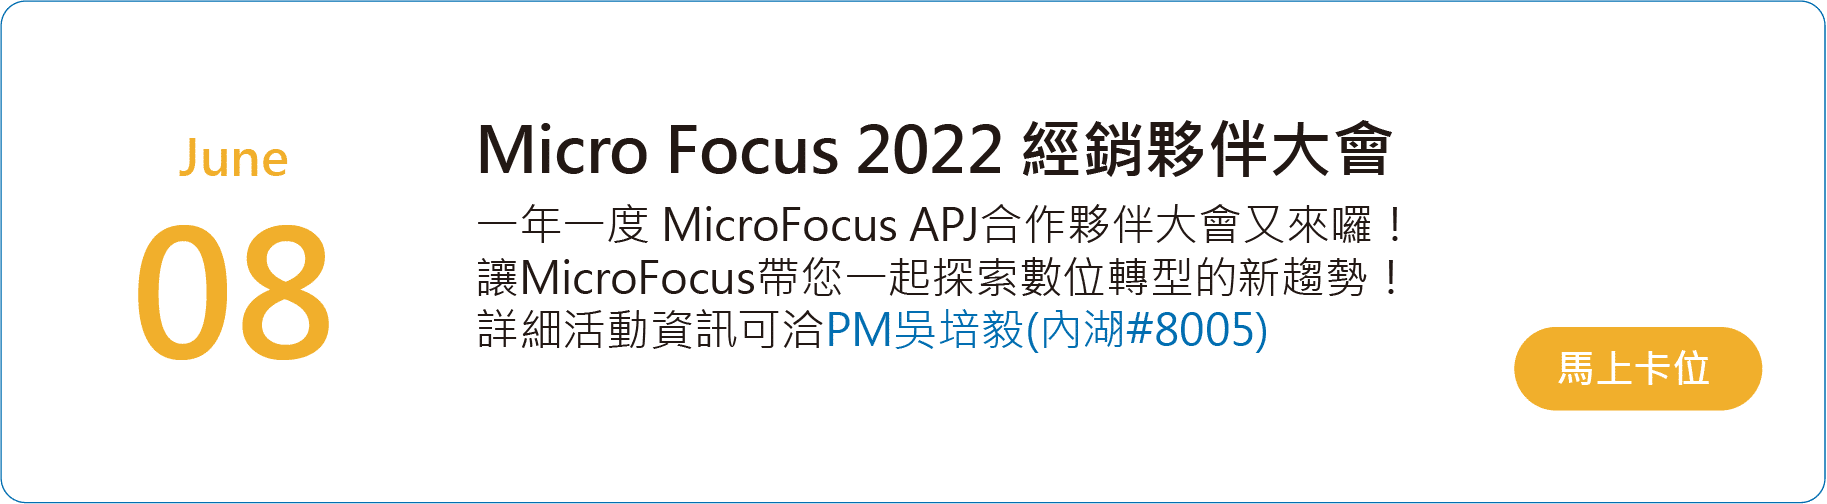 Micro Focus 2022經銷夥伴大會